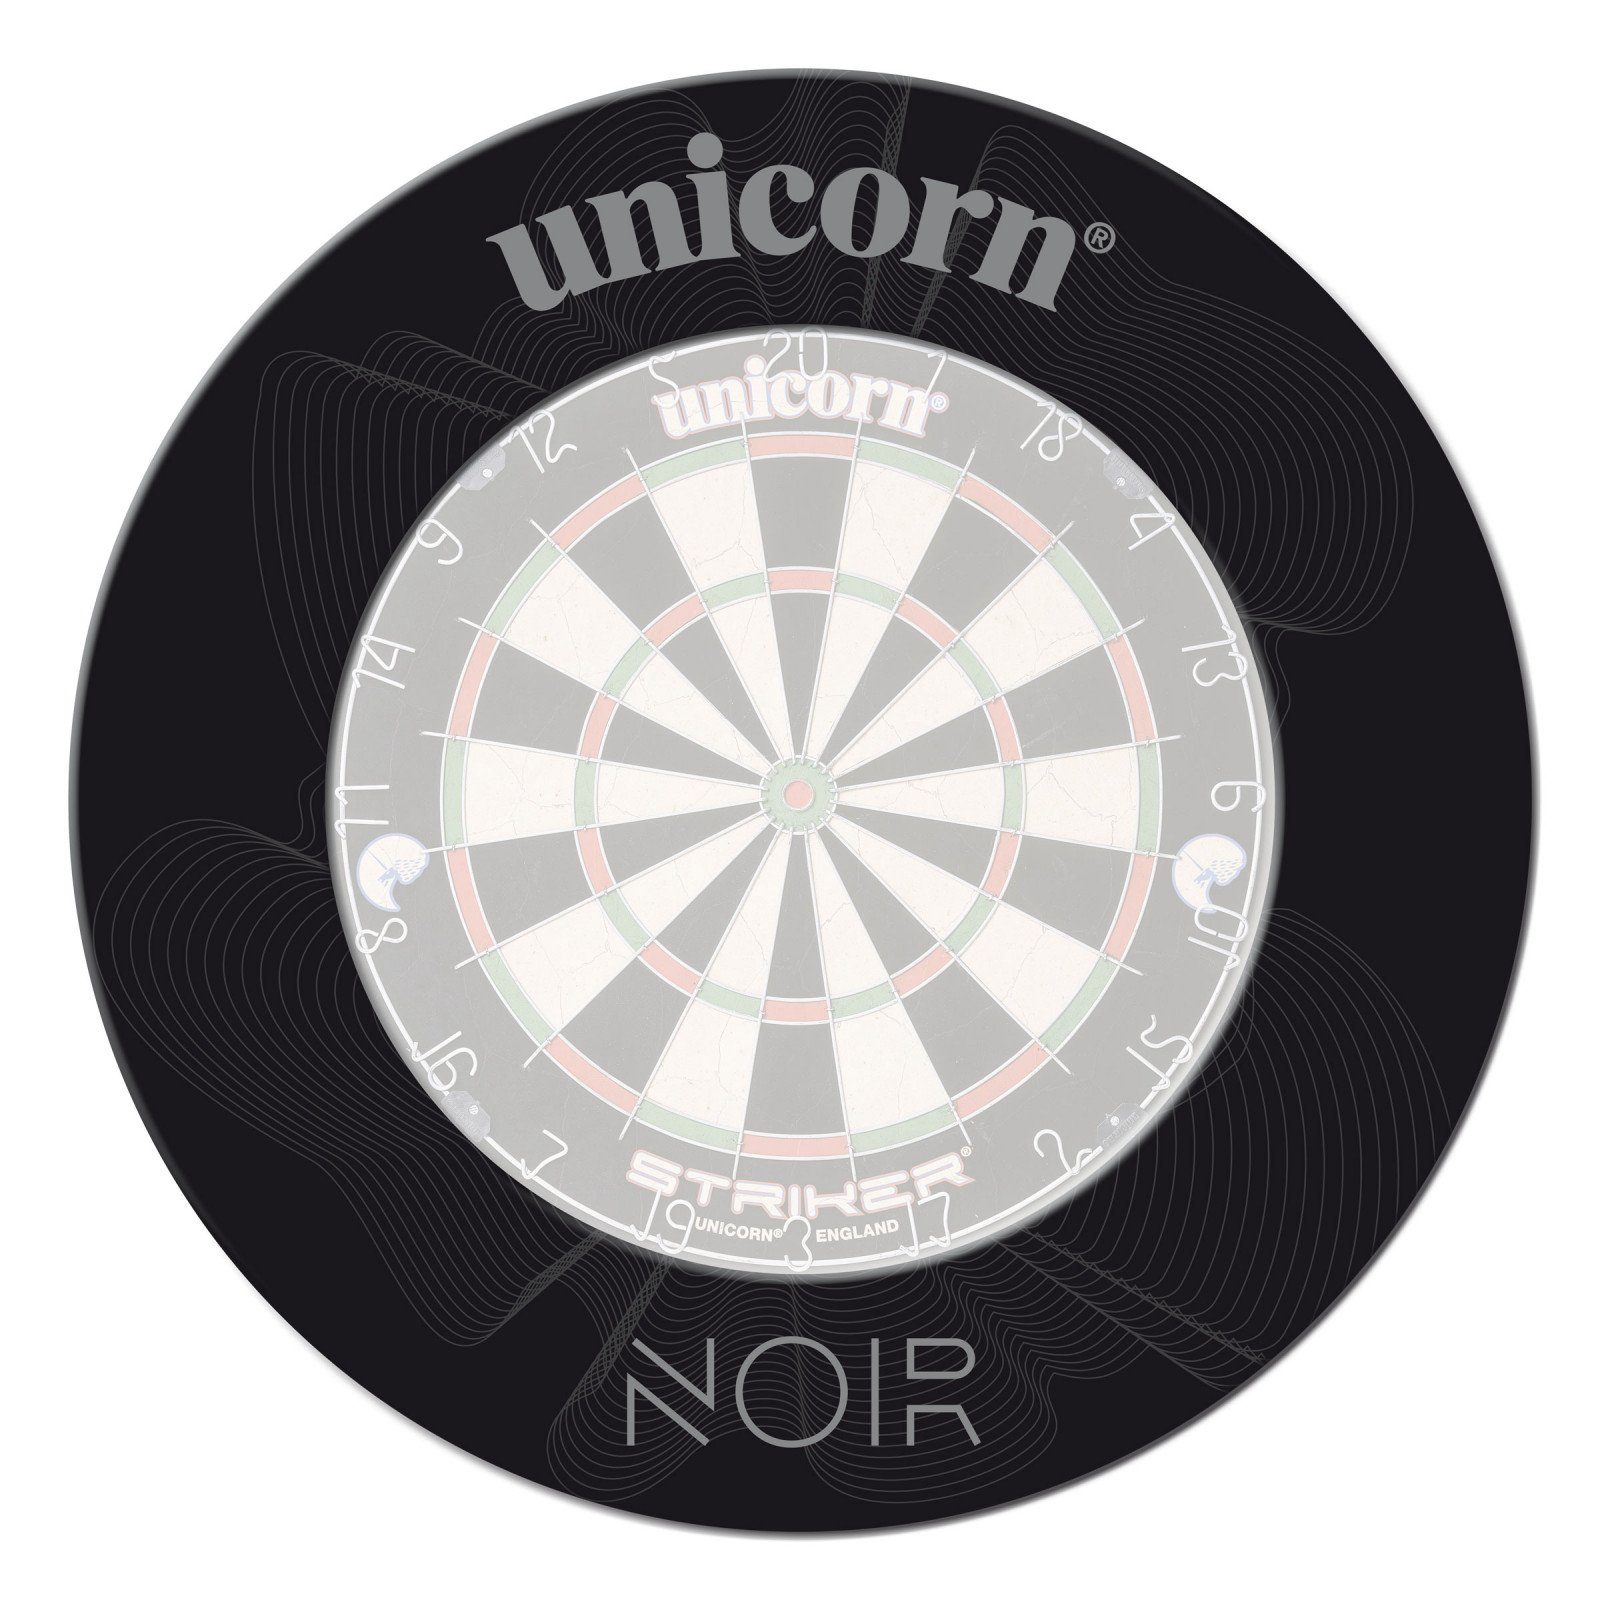 unicorn Dart-Wandschutz Professional Dartboard Noir schwarz Surround 